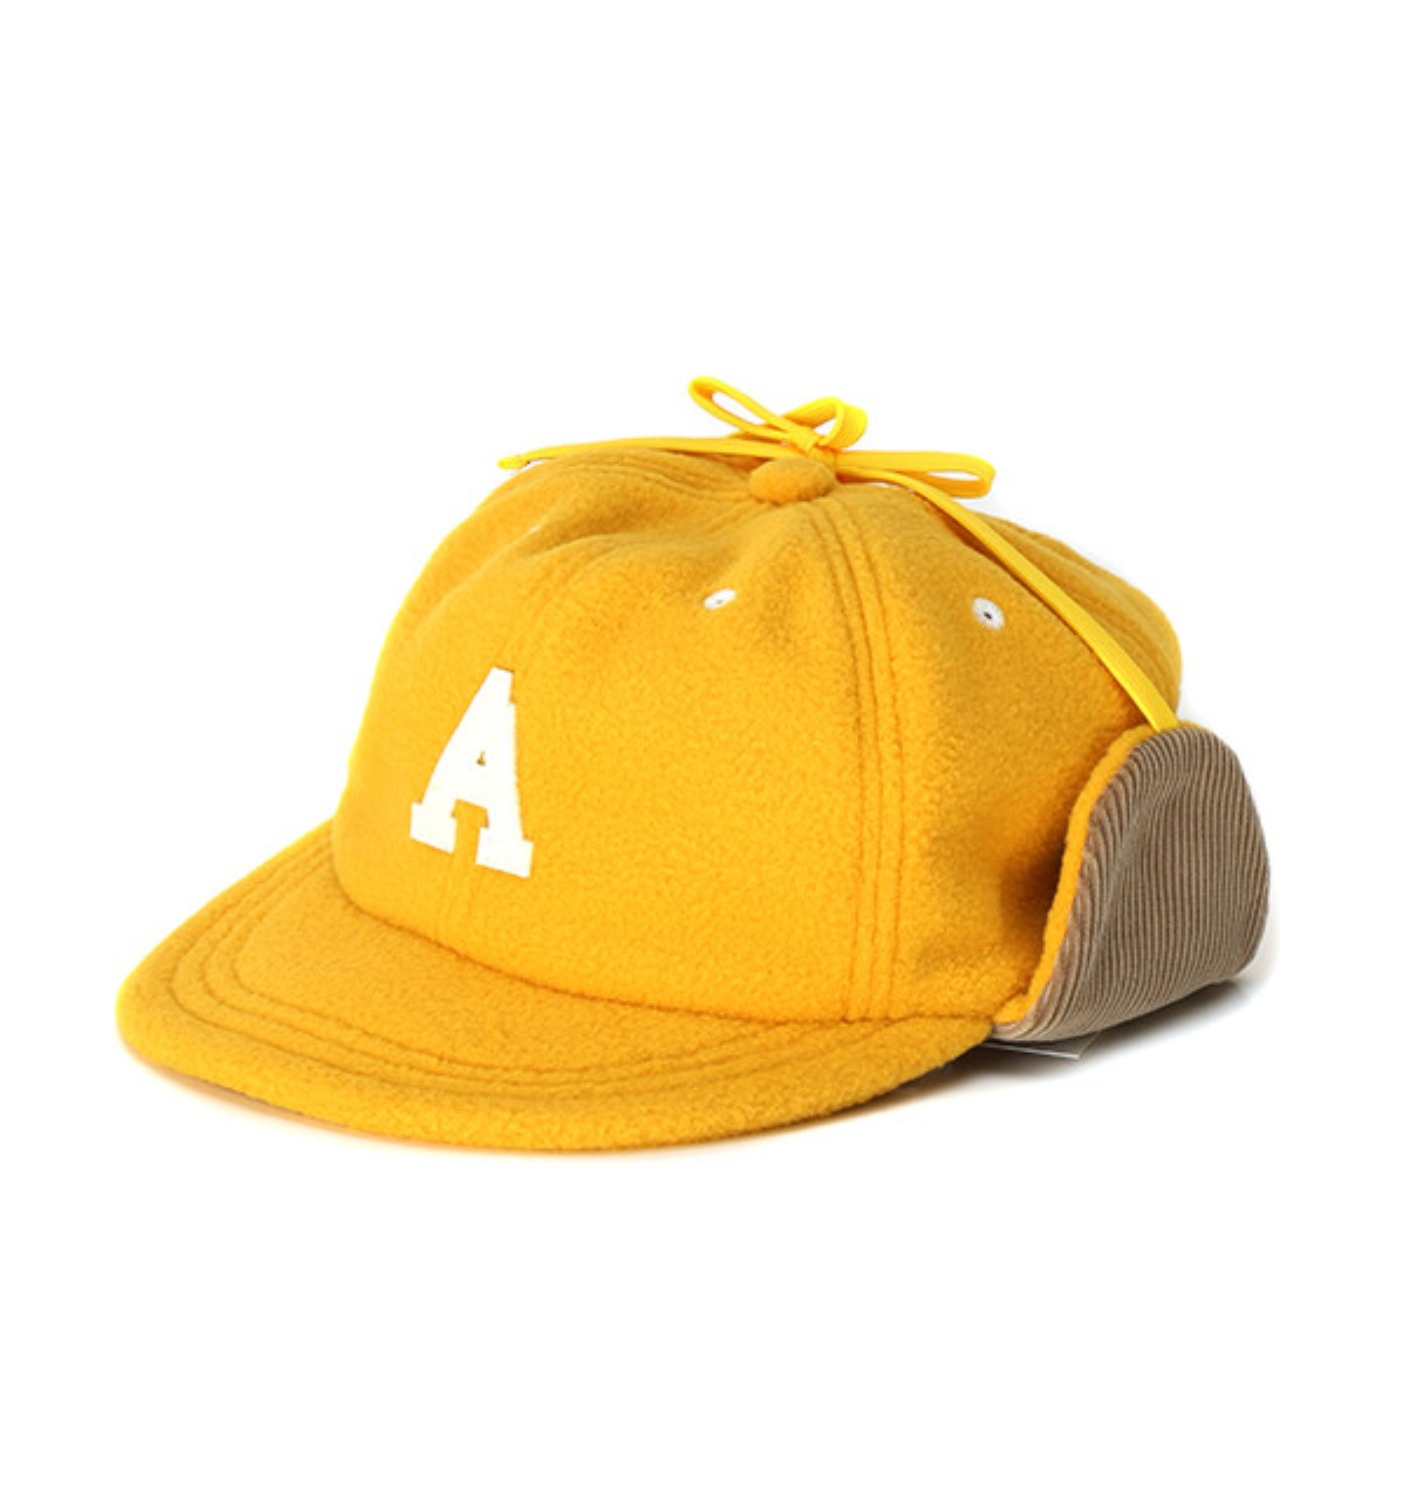 A CAP YELLOW